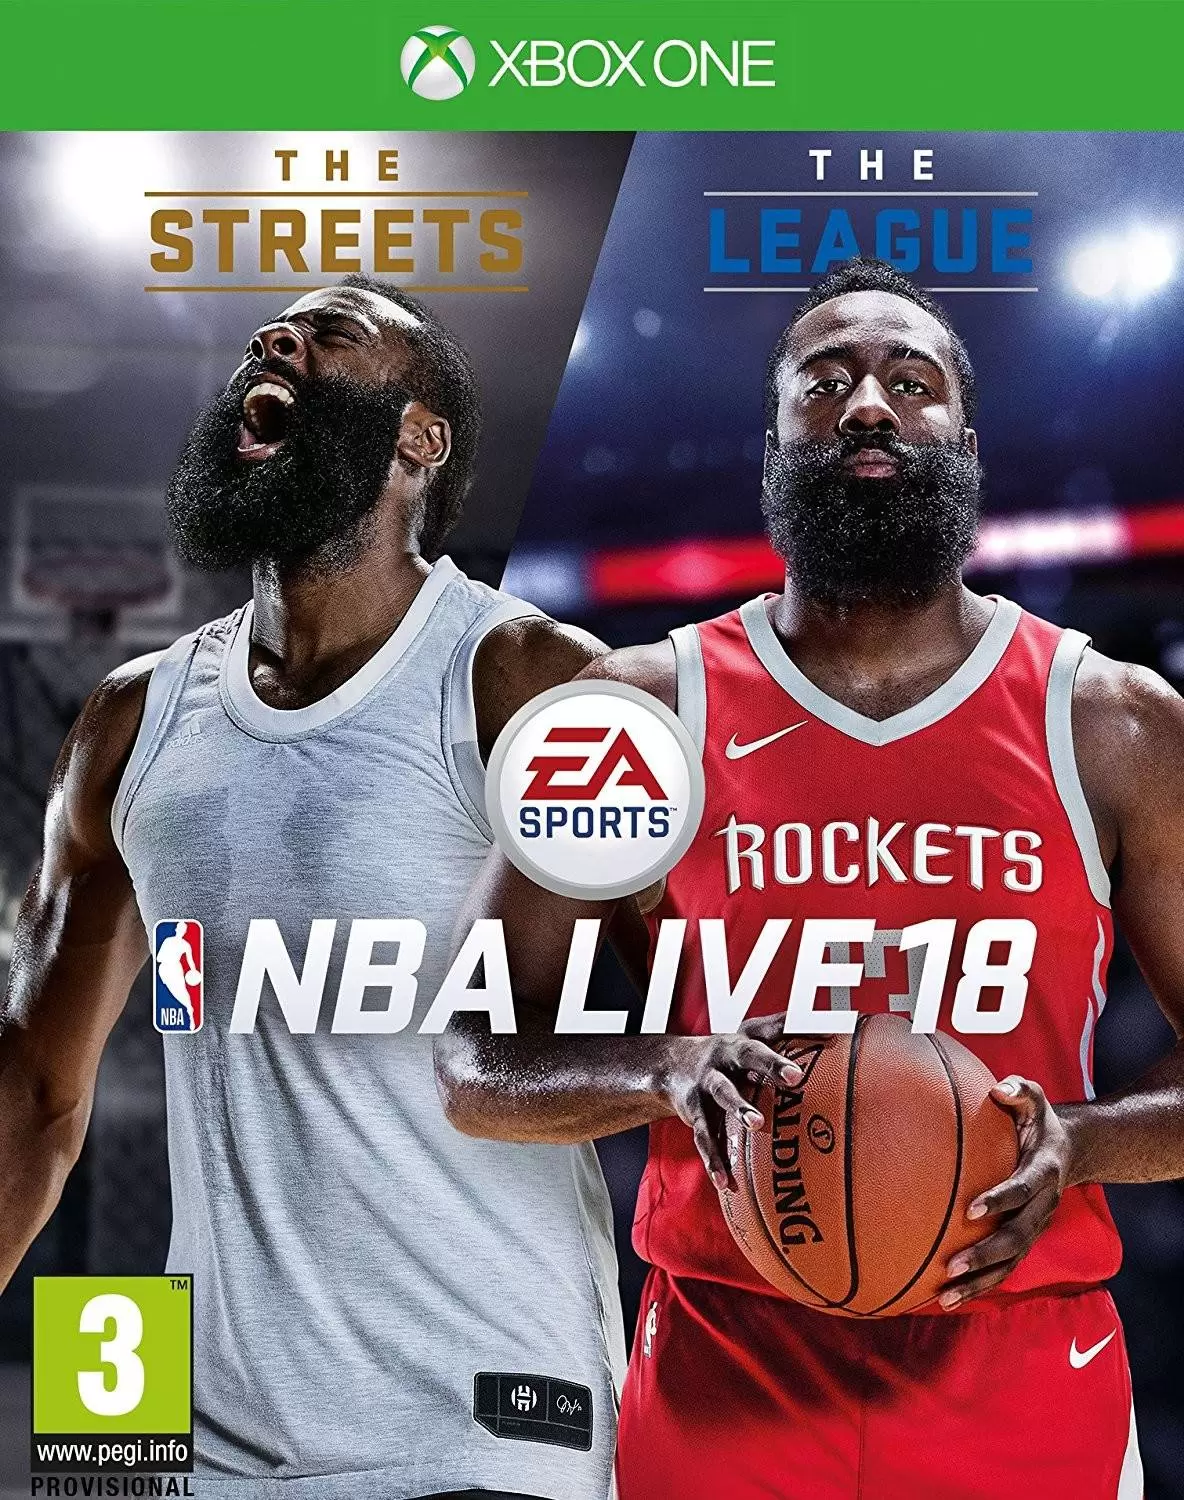 XBOX One Games - NBA Live 18